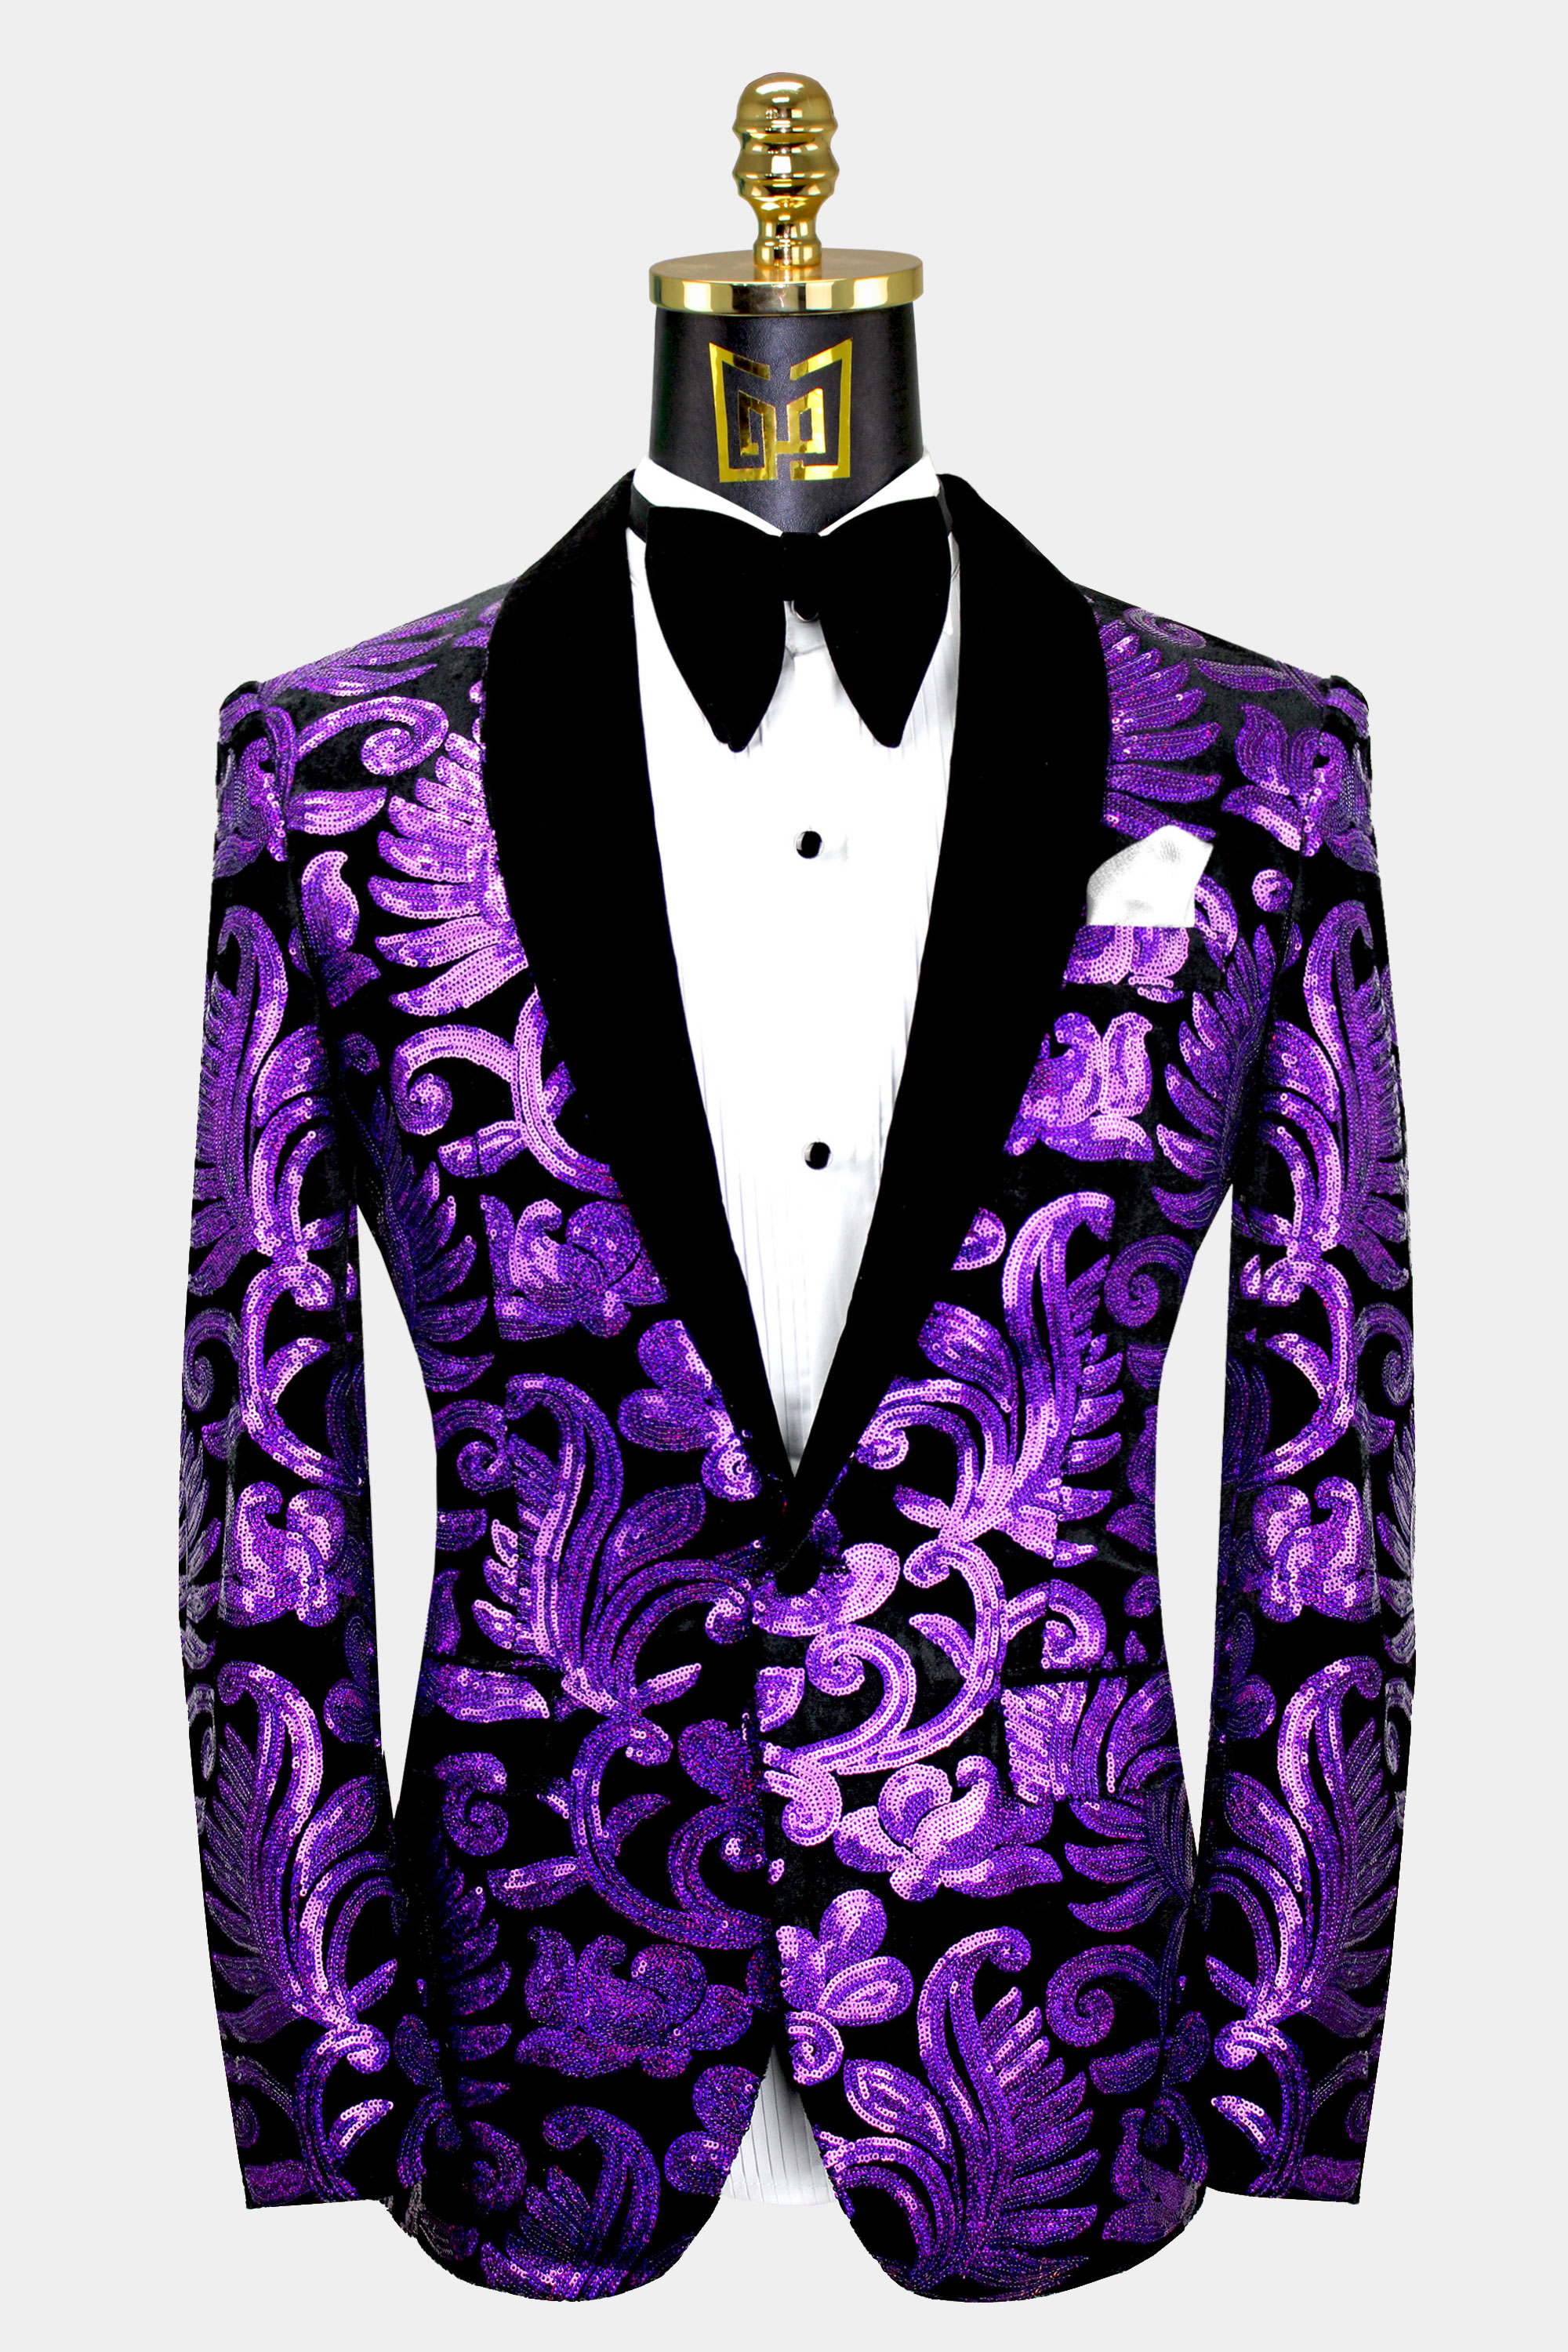 Black-and-Purple-Tuxedo-Jacket-Prom-Suit-Blazer-from-Gentlemansguru.com